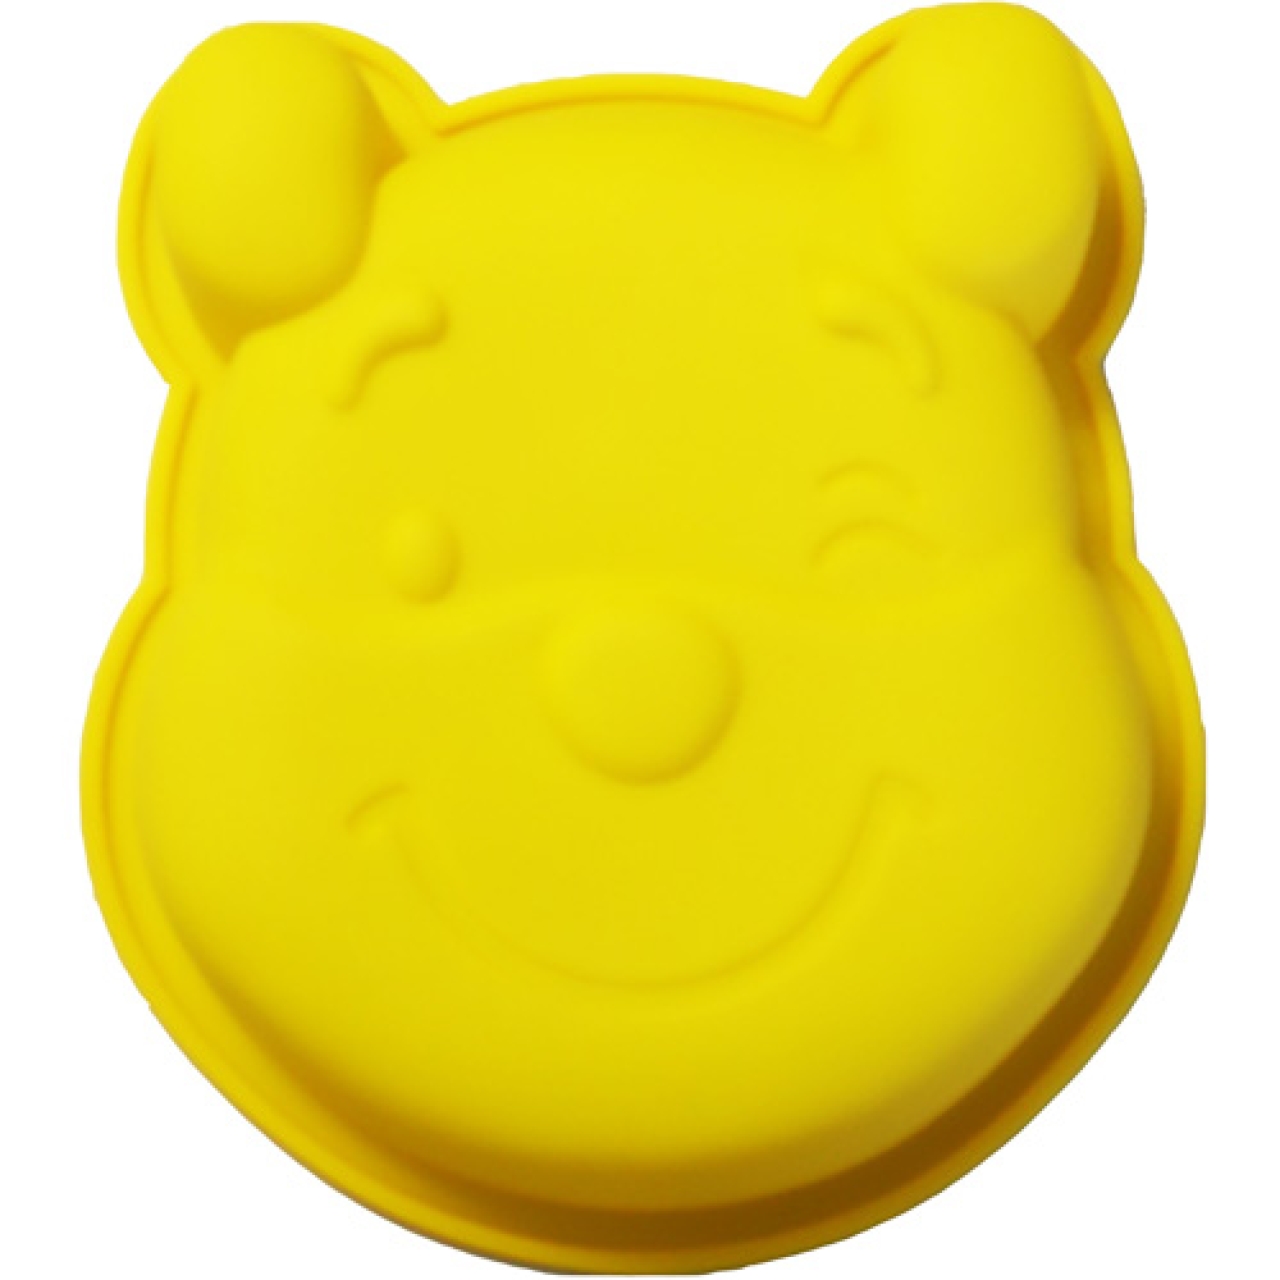 Silikonform "Winnie the Pooh" | MEINCUPCAKE Shop